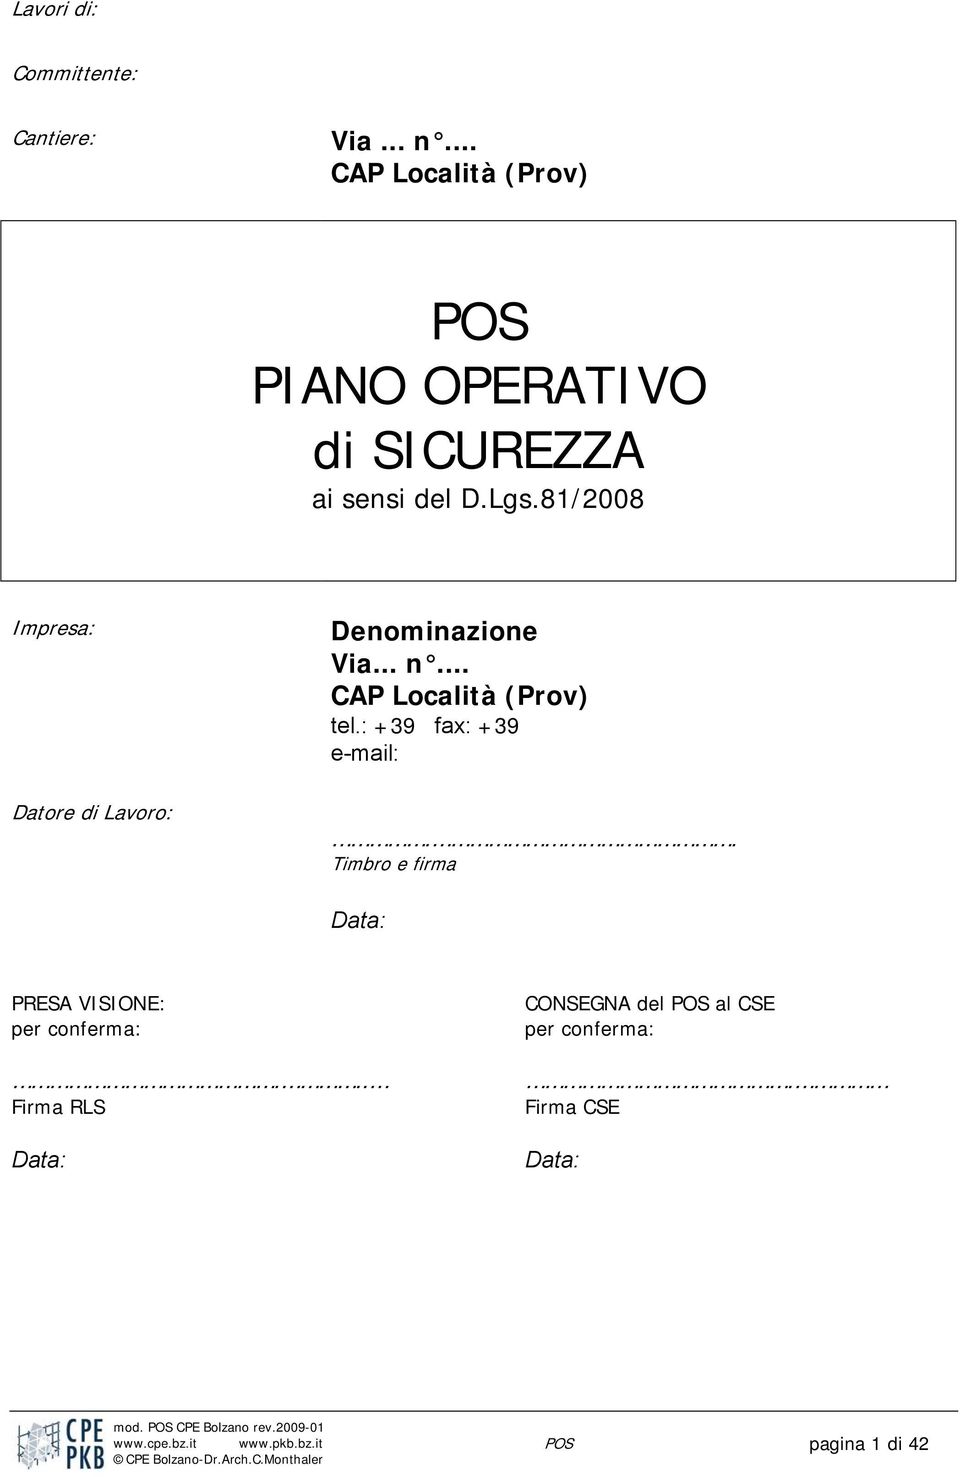 .. n... CAP Località (Prov) tel.: +39 fax: +39 e-mail:.